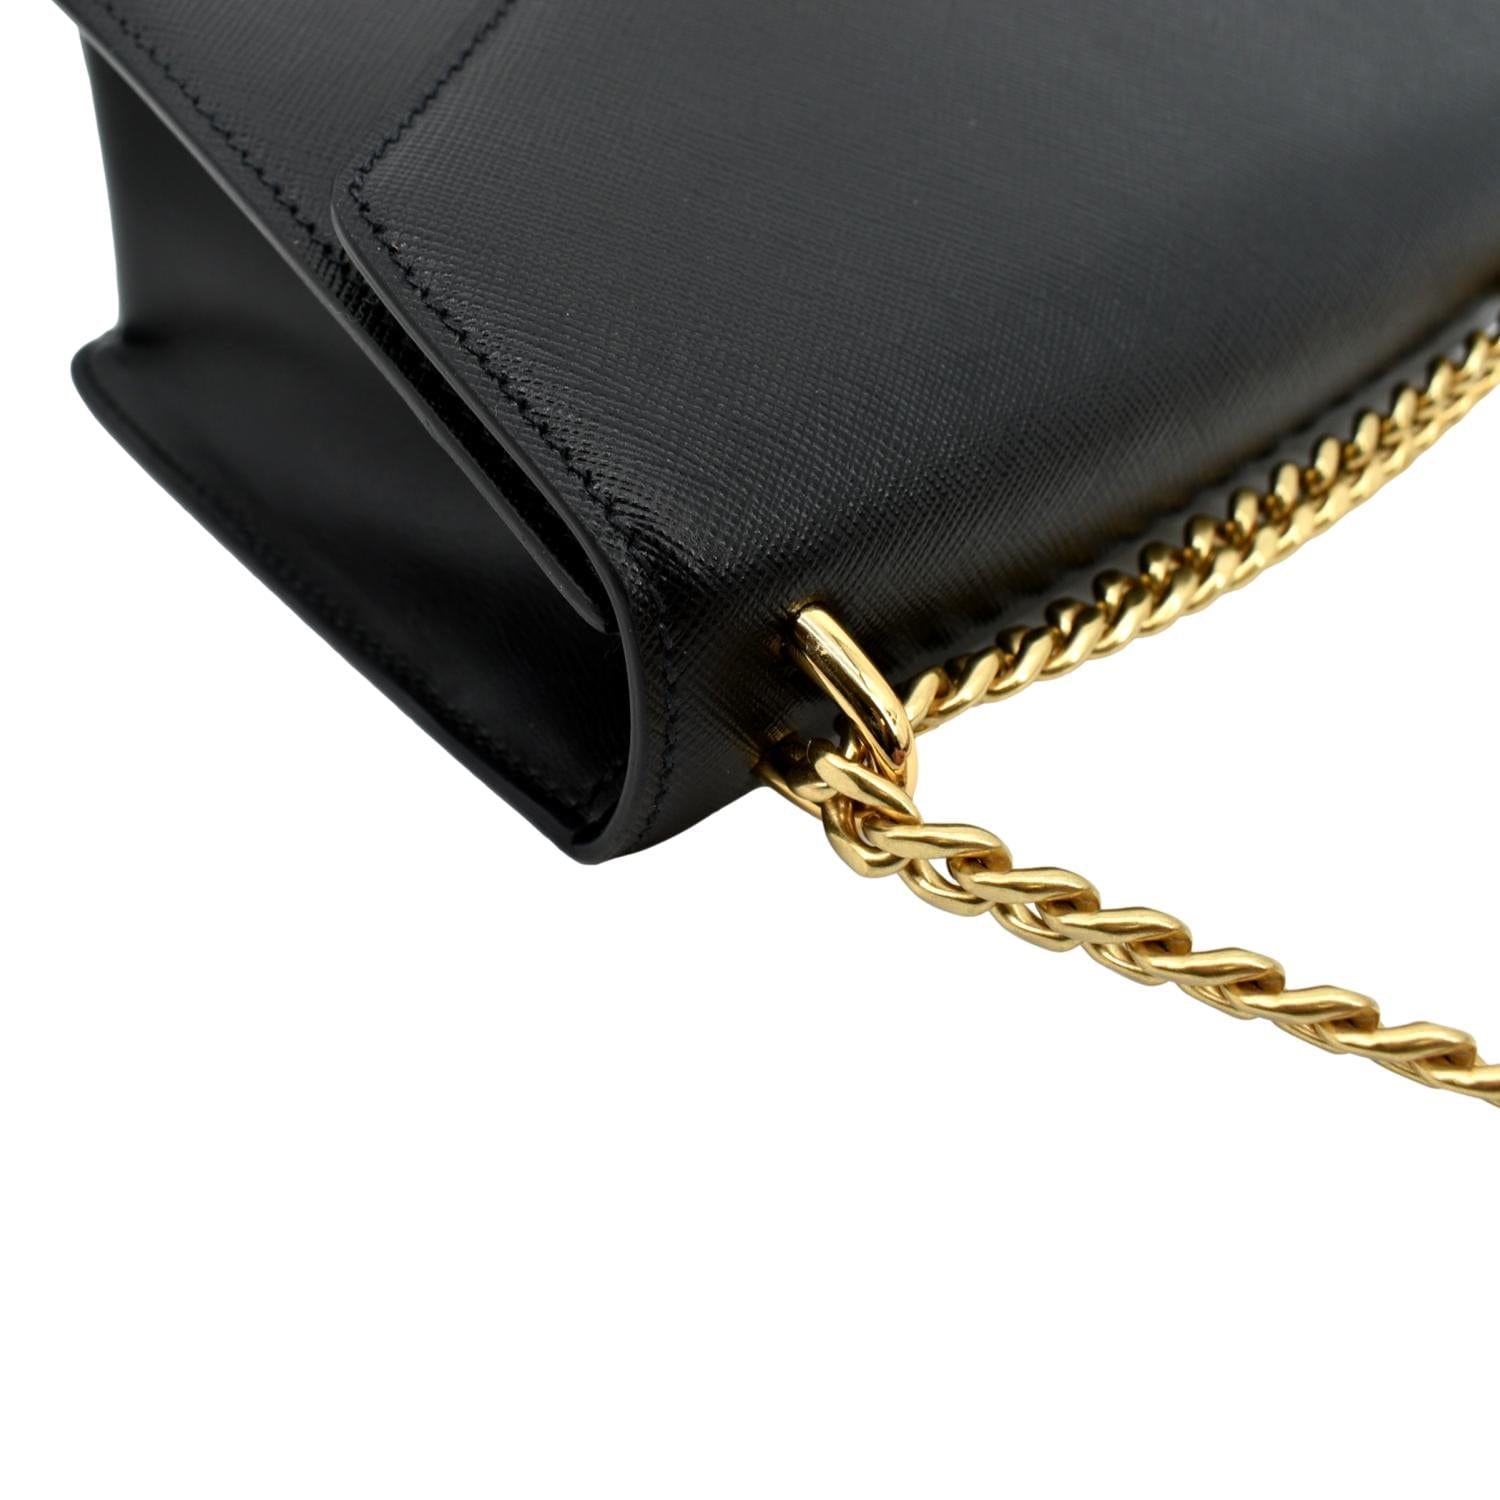 Prada Saffiano Vernice Bandoliera - Black Crossbody Bags, Handbags